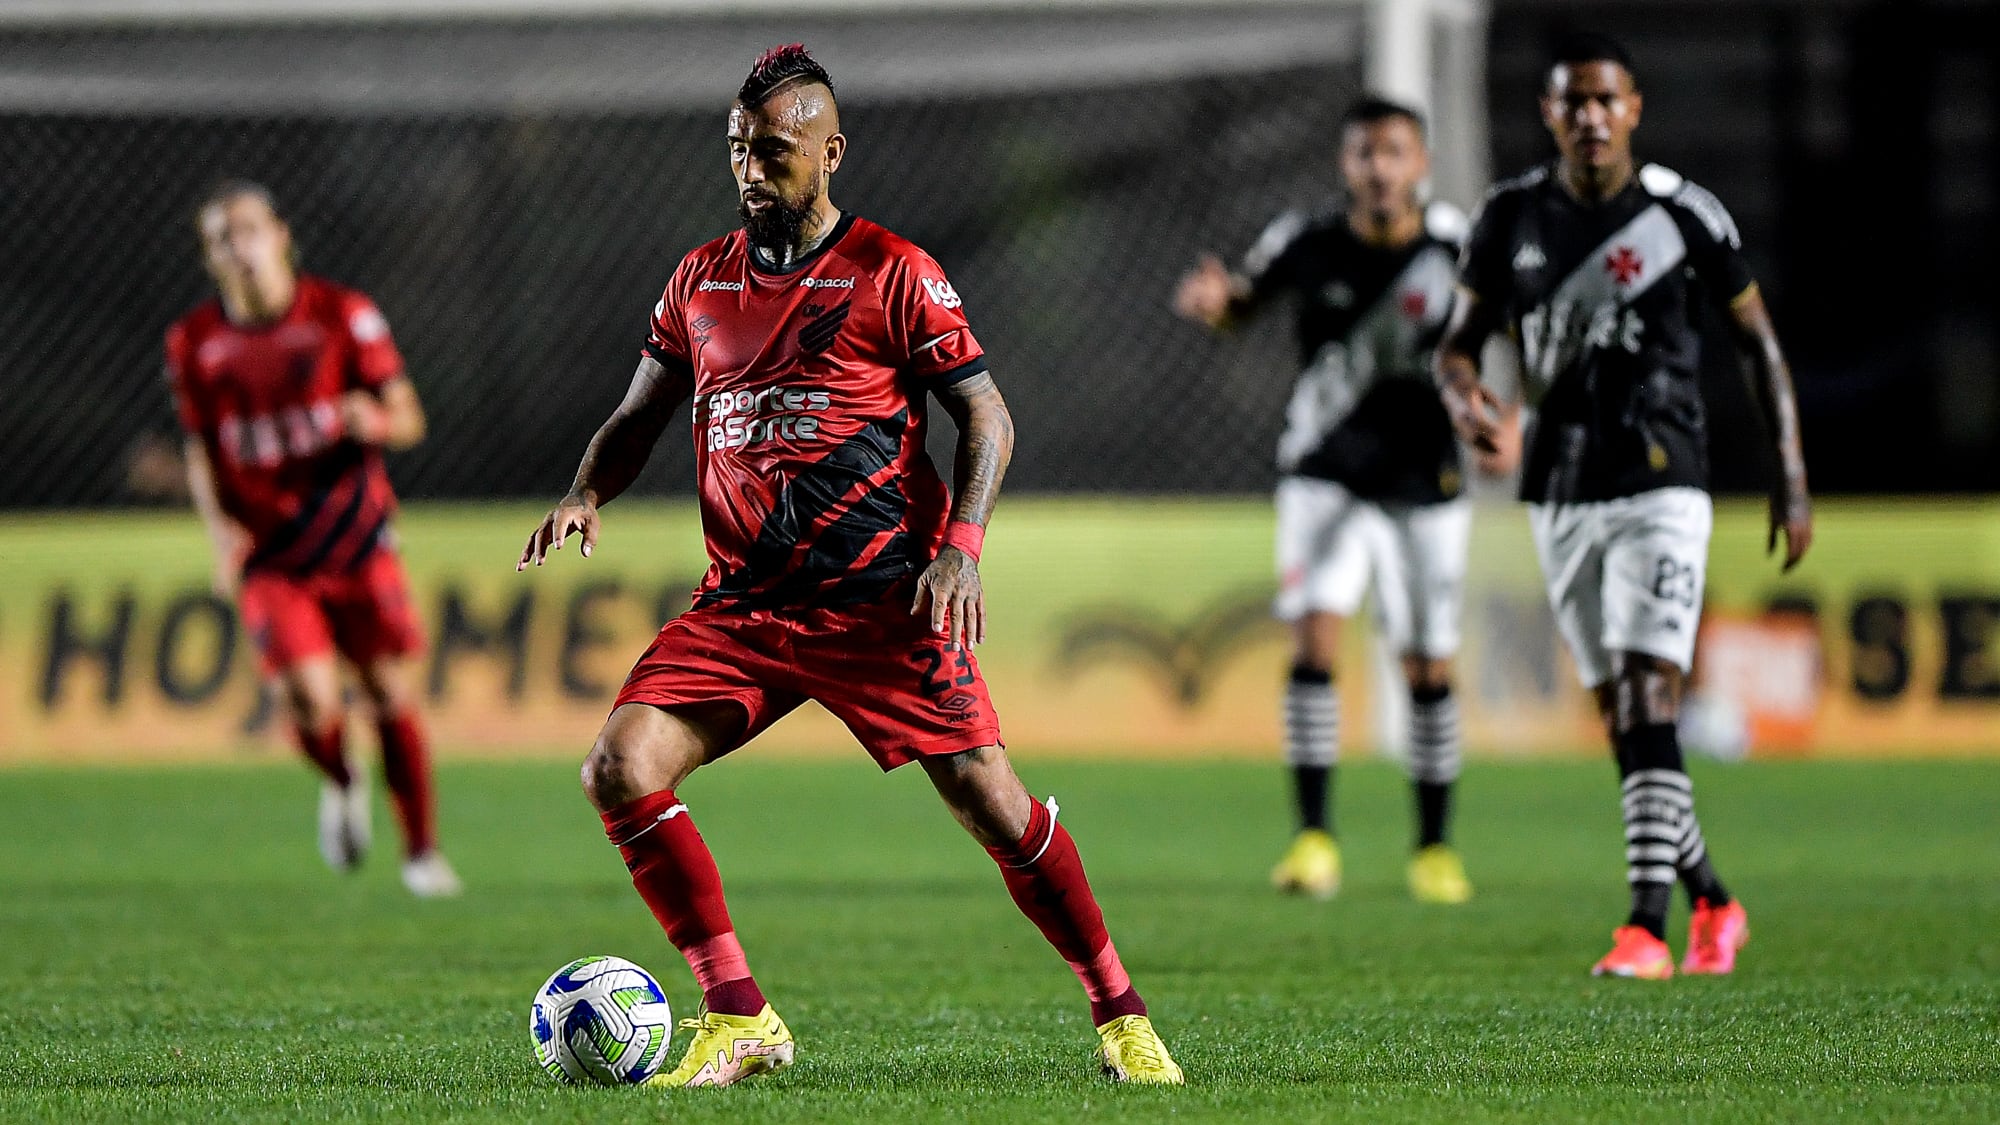 Vidal jugó ante Vasco da Gama su primer partido de titular por el Paranaense. / Photosport